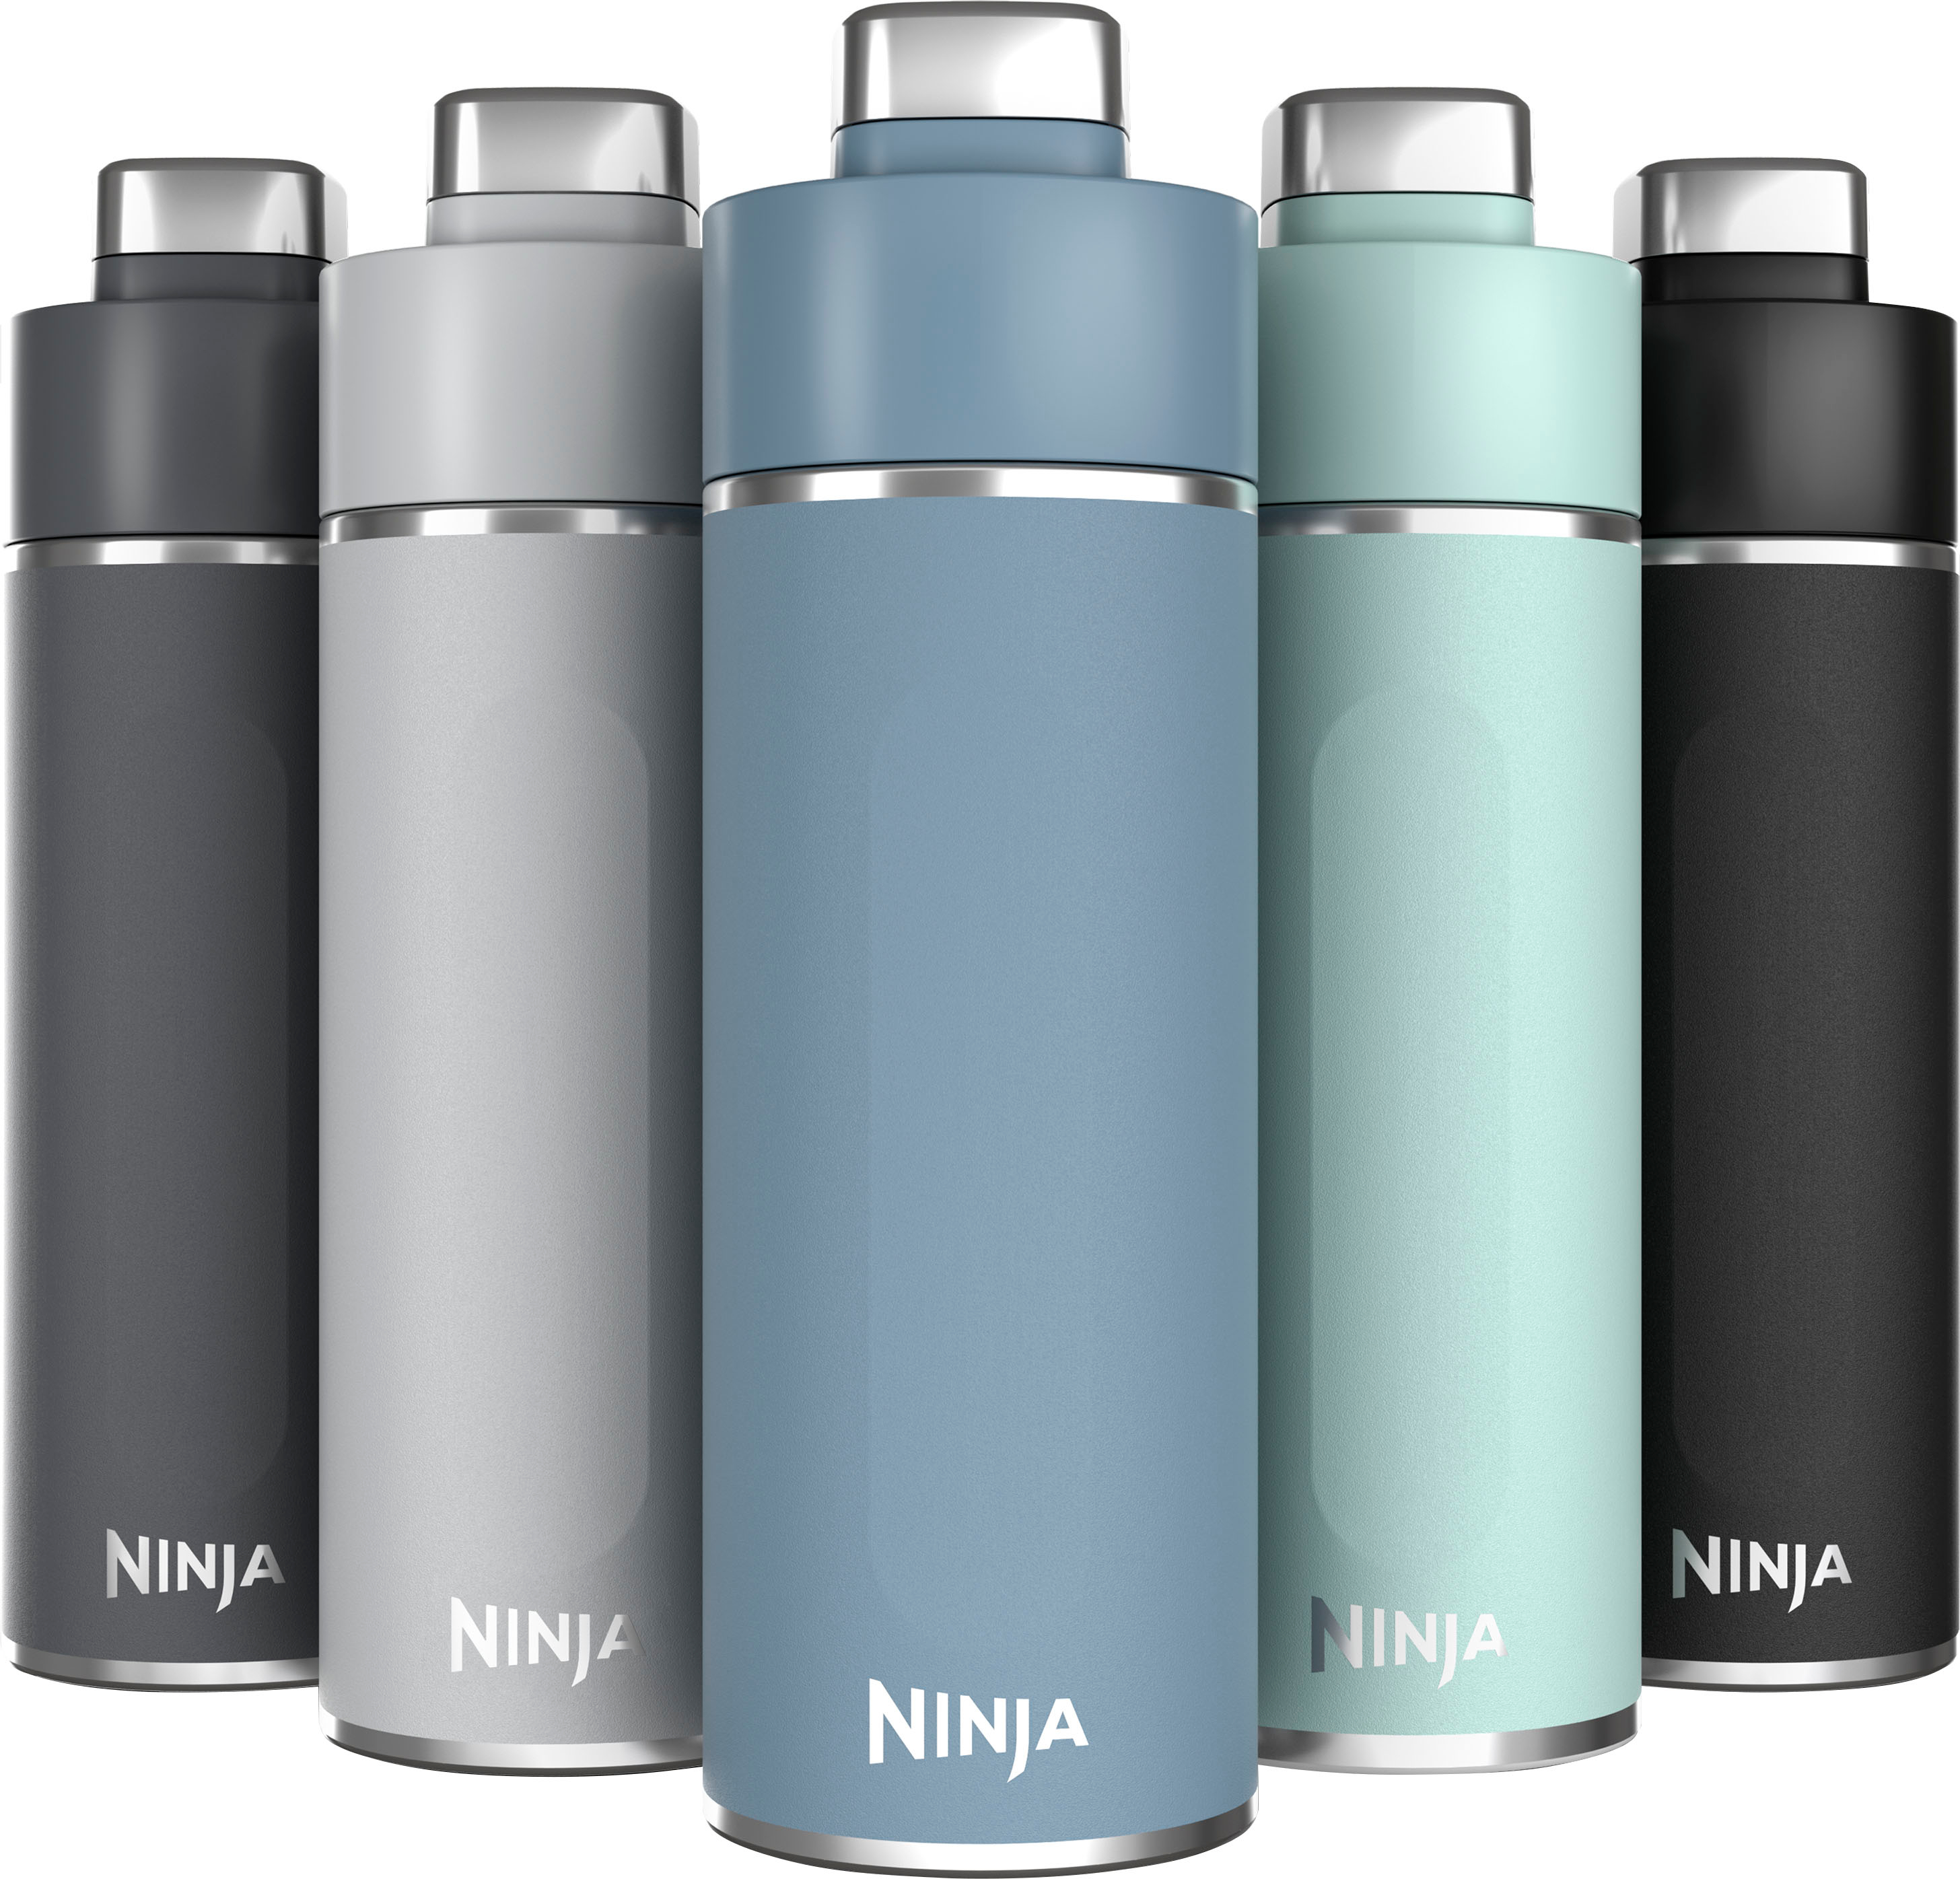 SharkNinja's First Hydration System, Ninja Thirsti™, Allows Users